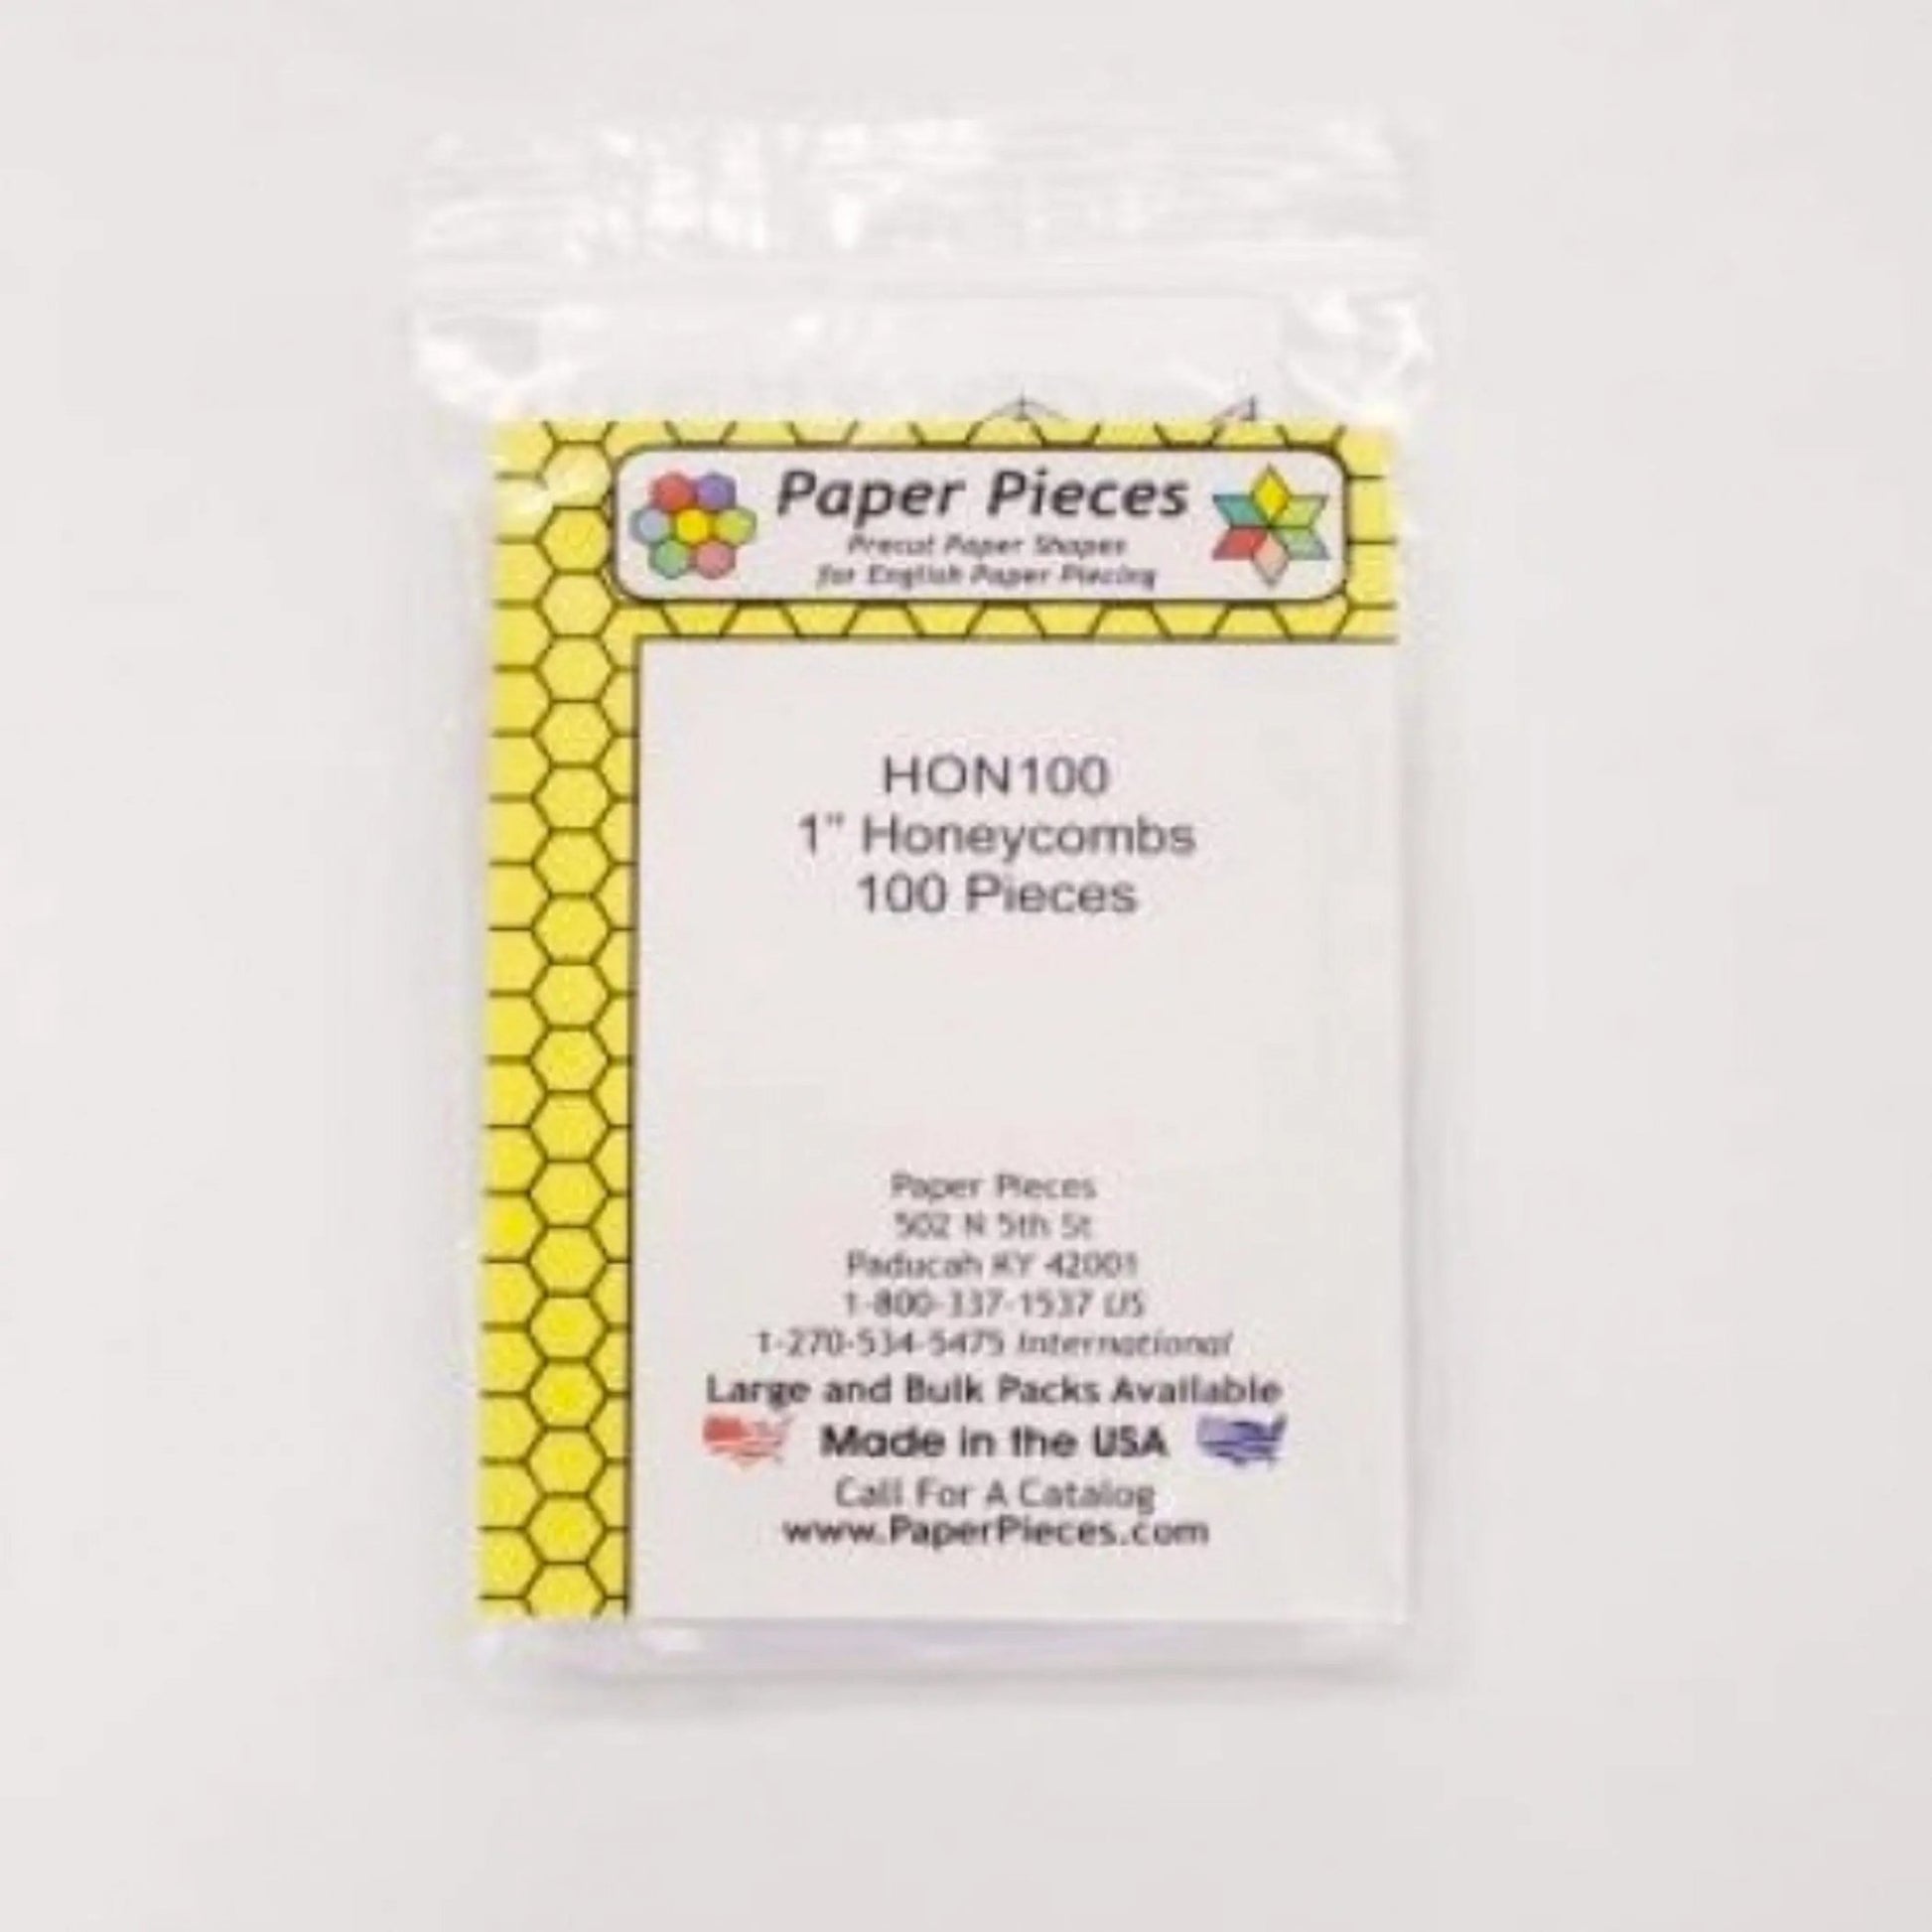 1" Honeycomb Paper Pieces - Jammin Threads